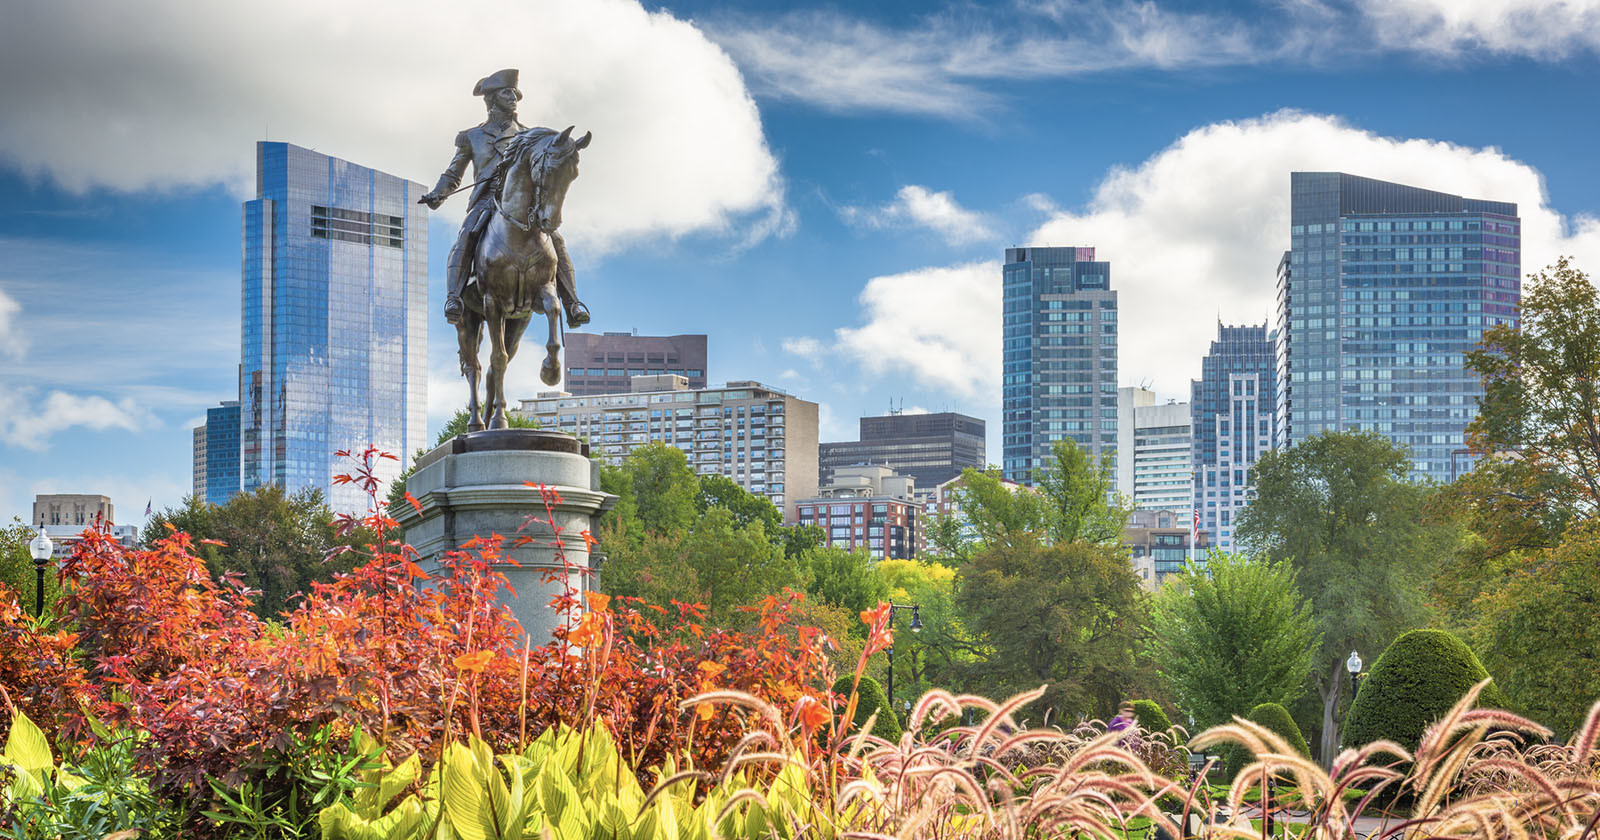 Drone Seasonlapse Captures the Beauty of Boston Across Seasons